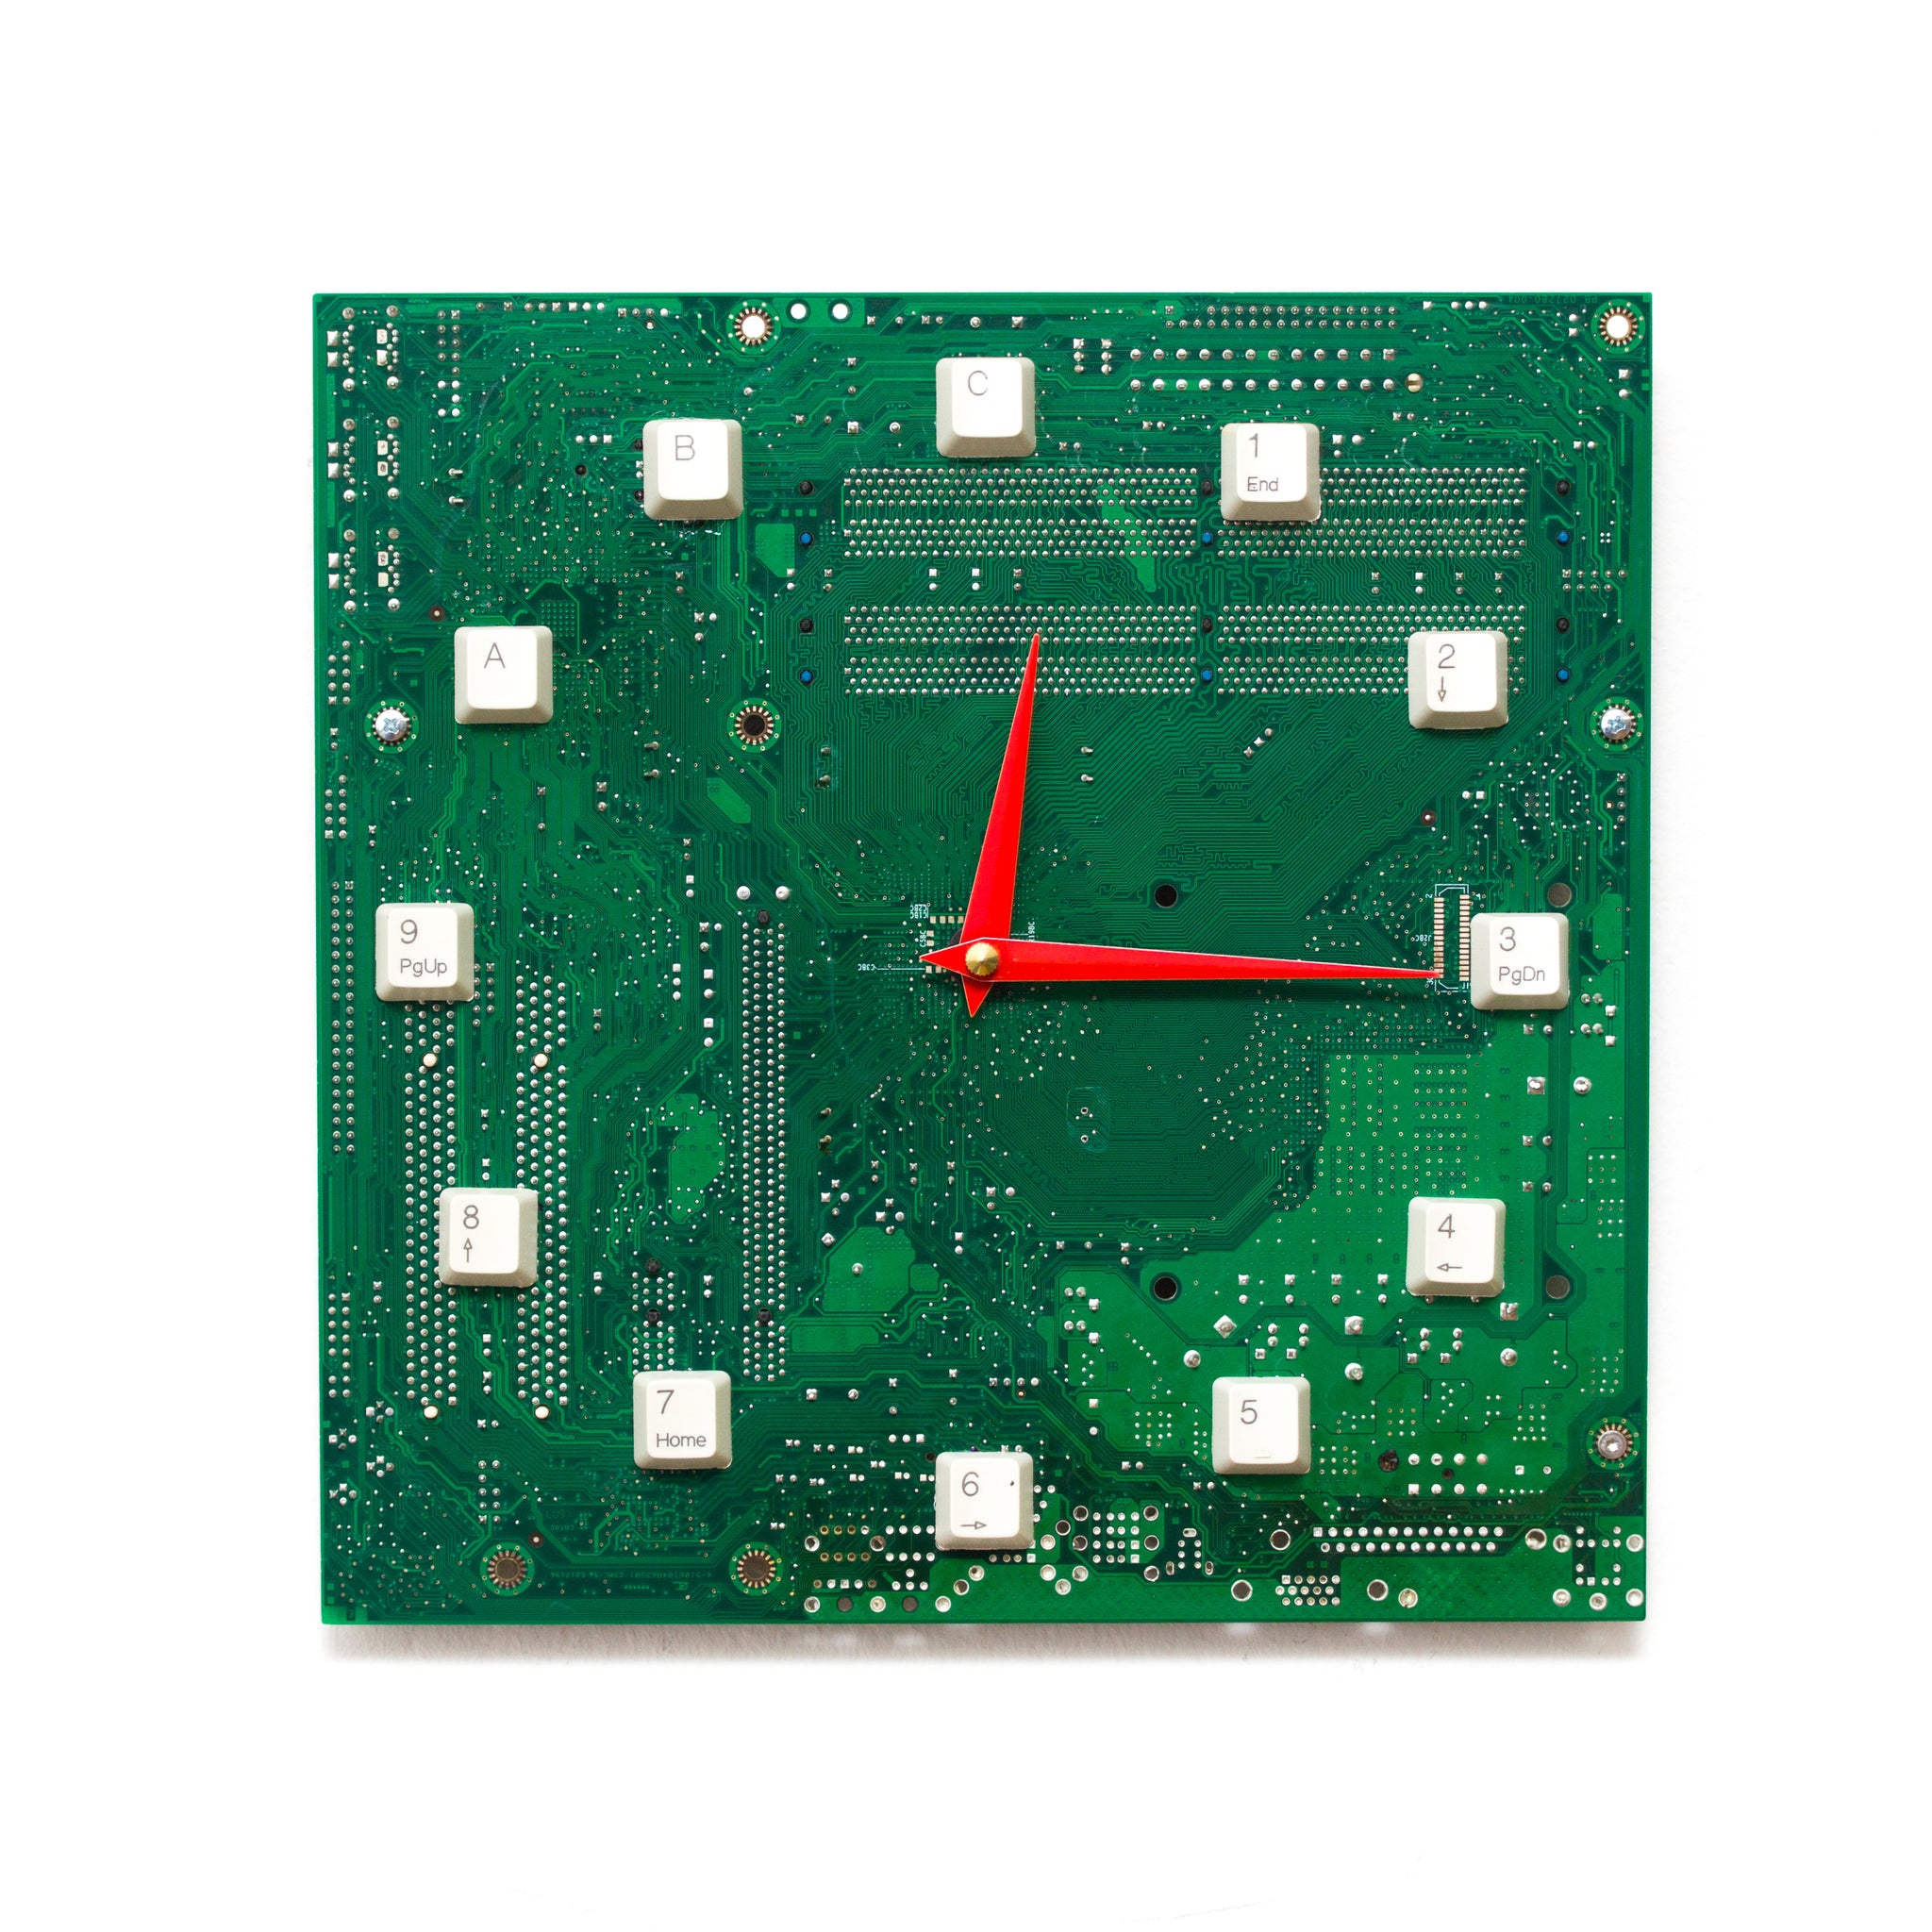 Wall Clock made of green motherboard